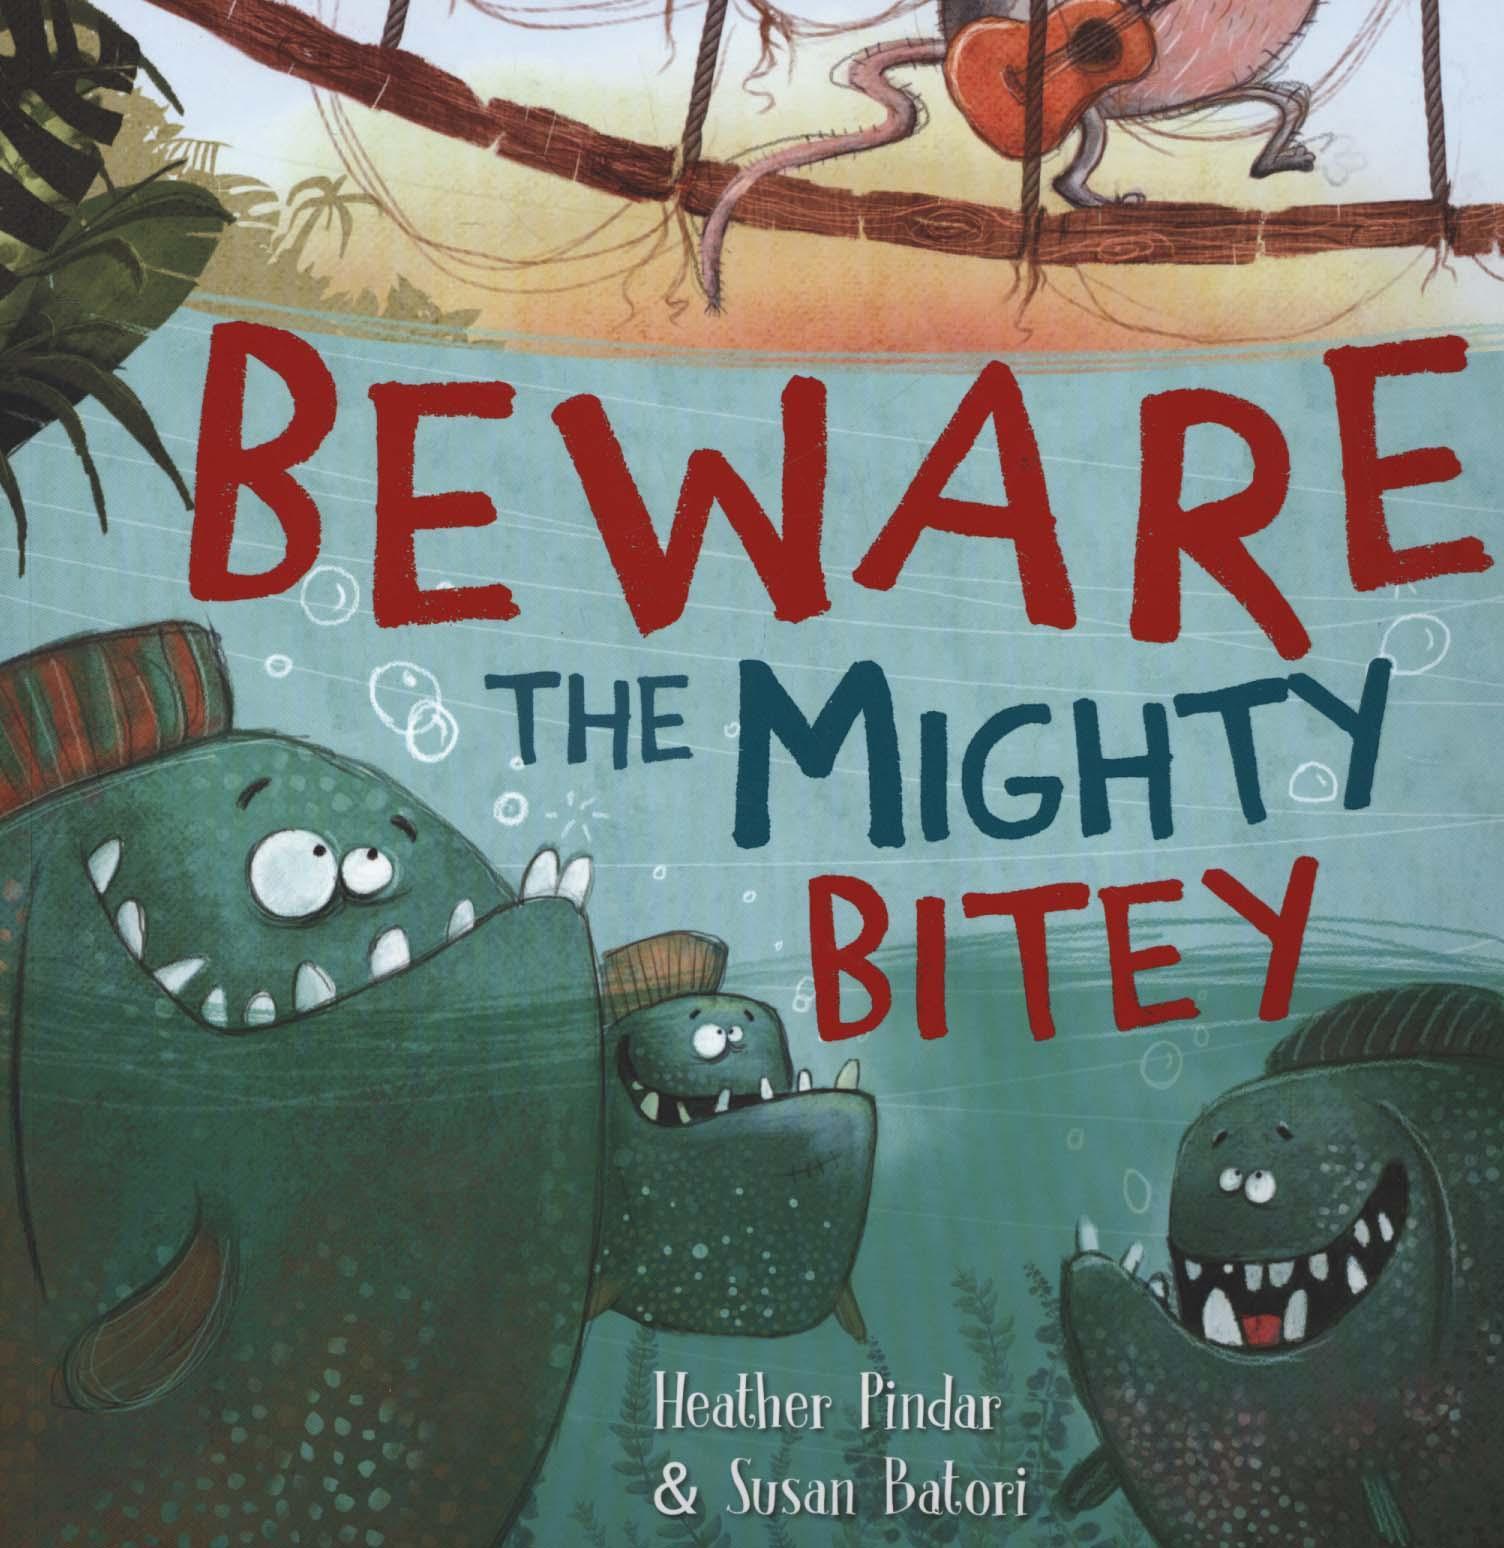 Beware the Mighty Bitey